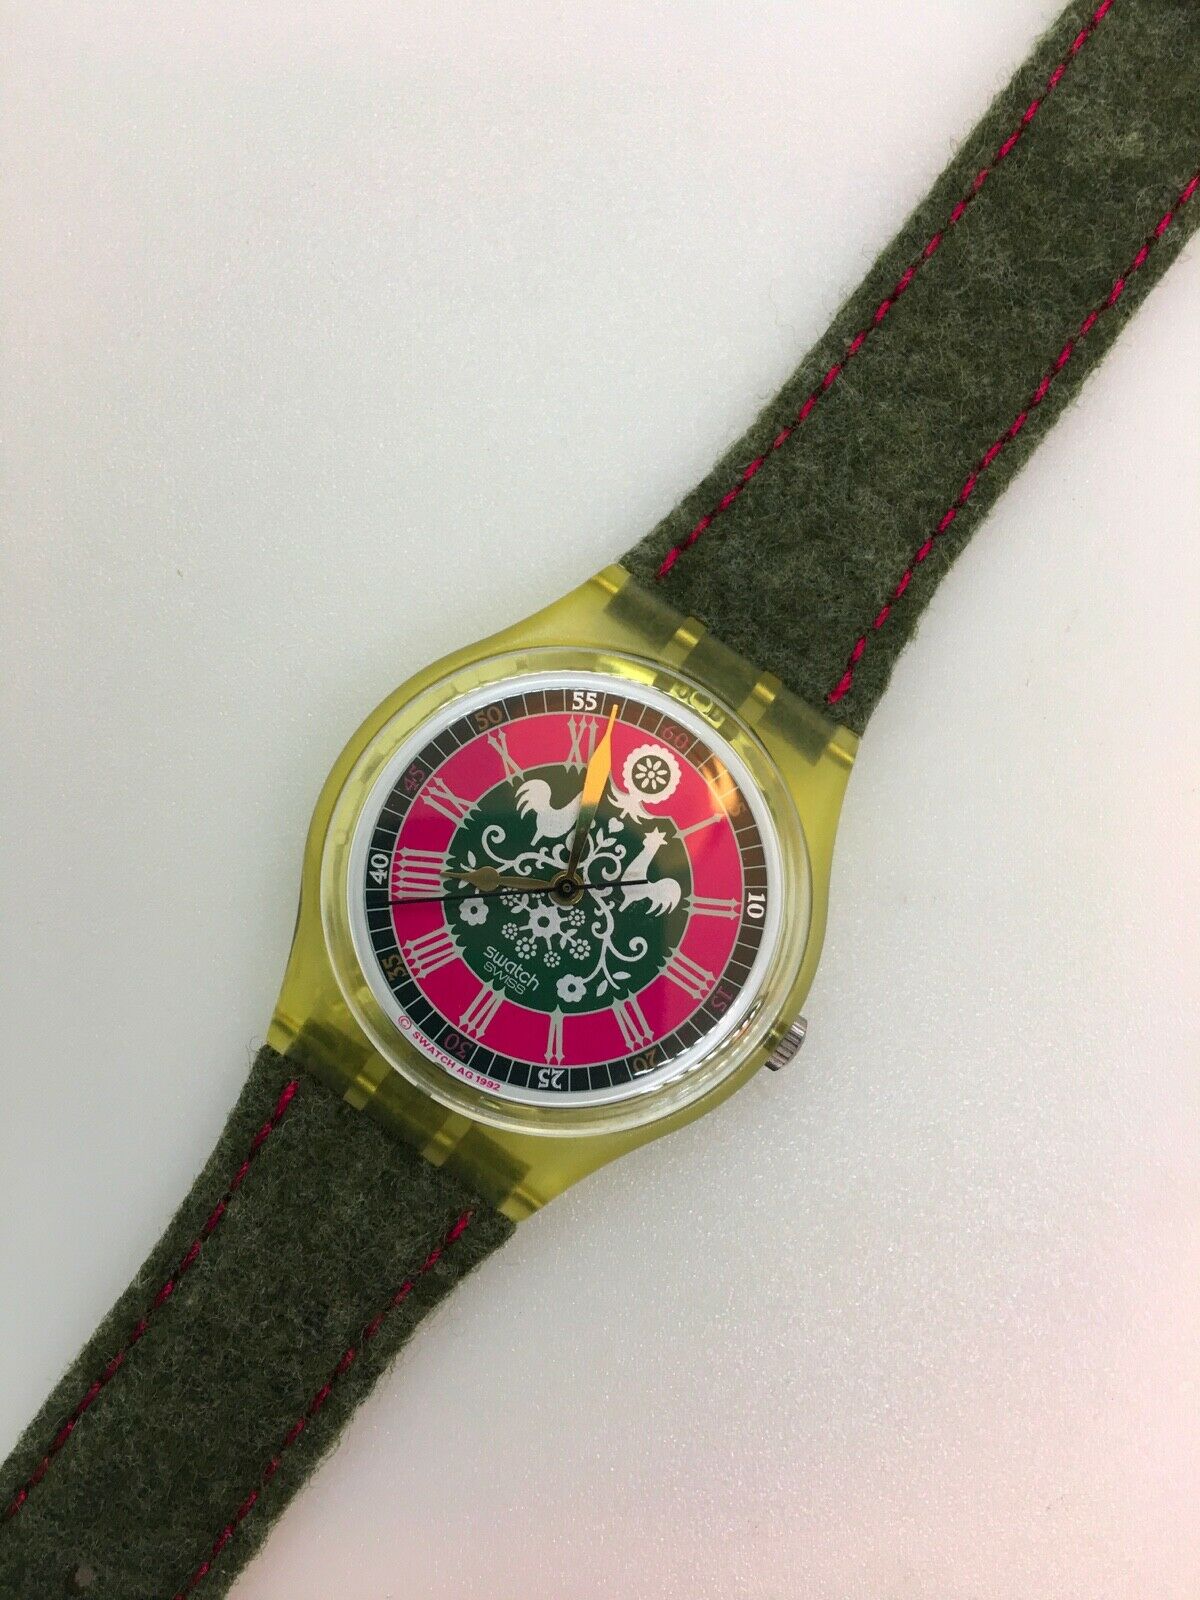 Swatch GK167 Vintage Quartz Watch. Loden material u0026 Leather straps looks  rustic | WatchCharts